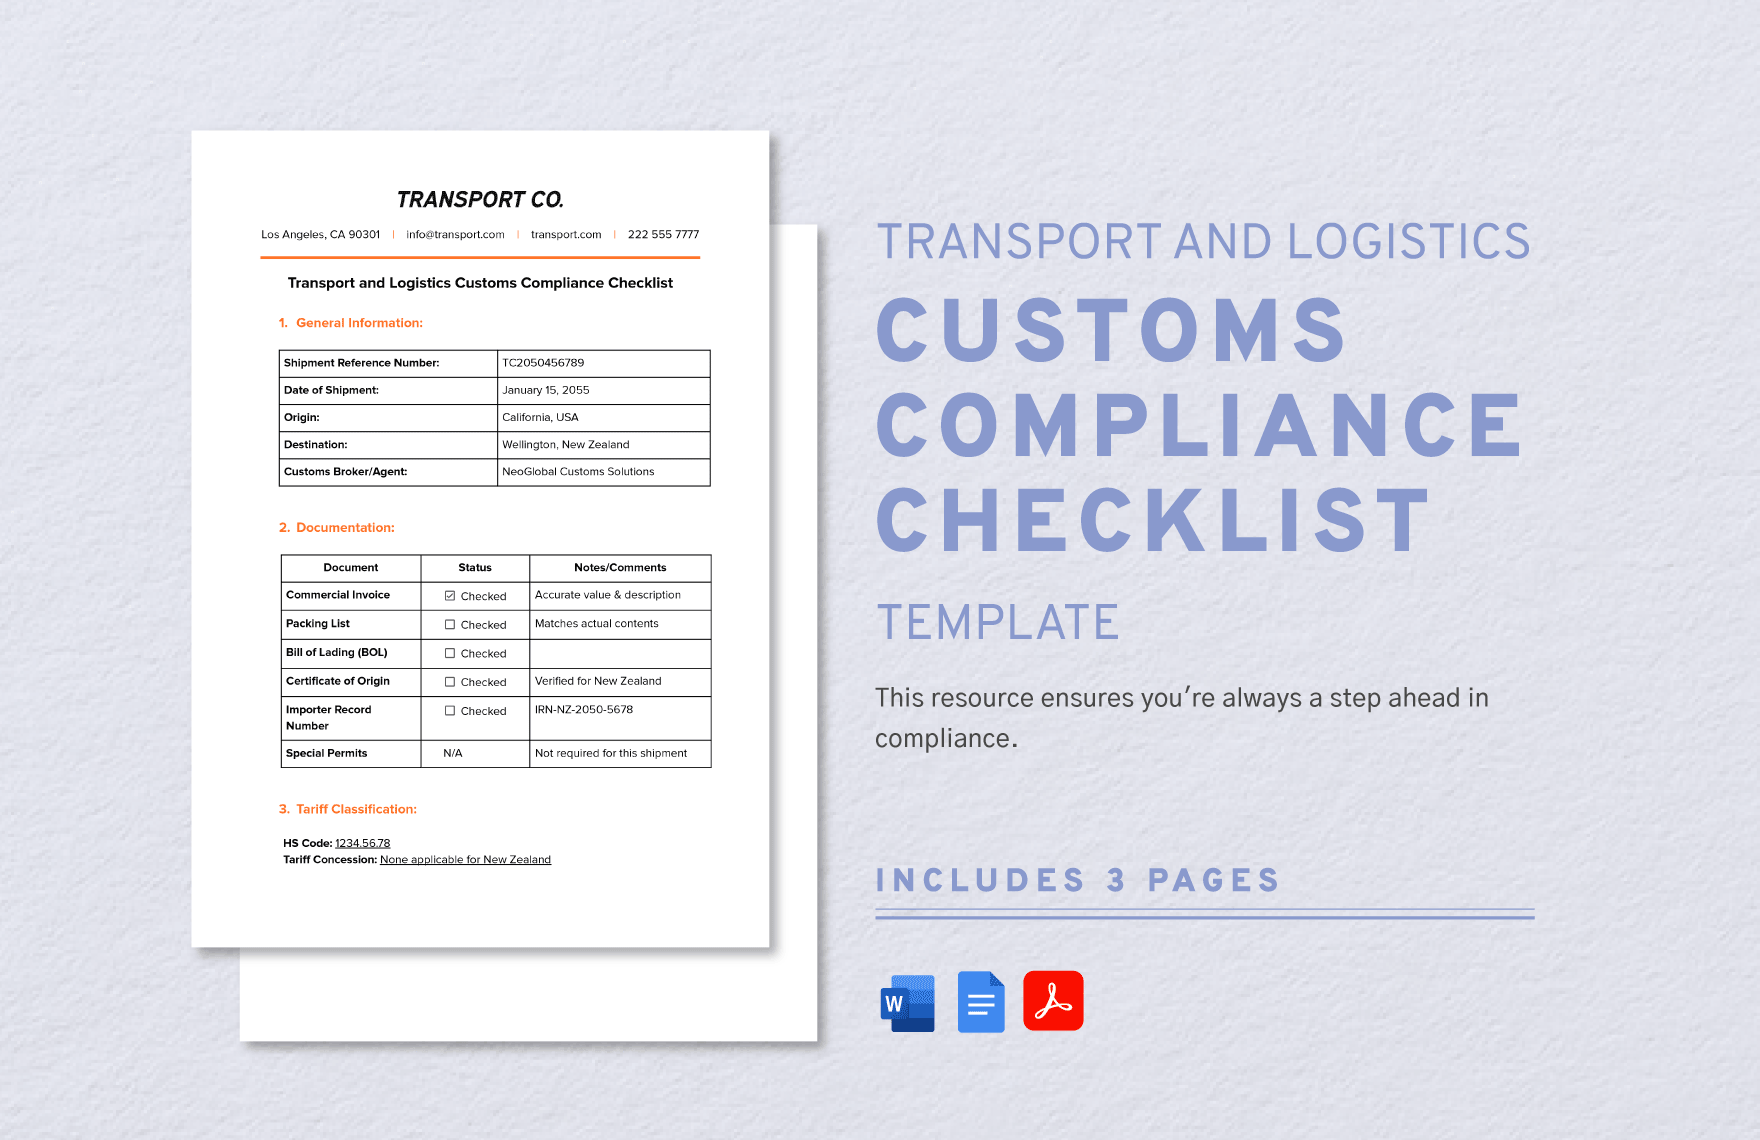 Transport and Logistics Customs Compliance Checklist Template